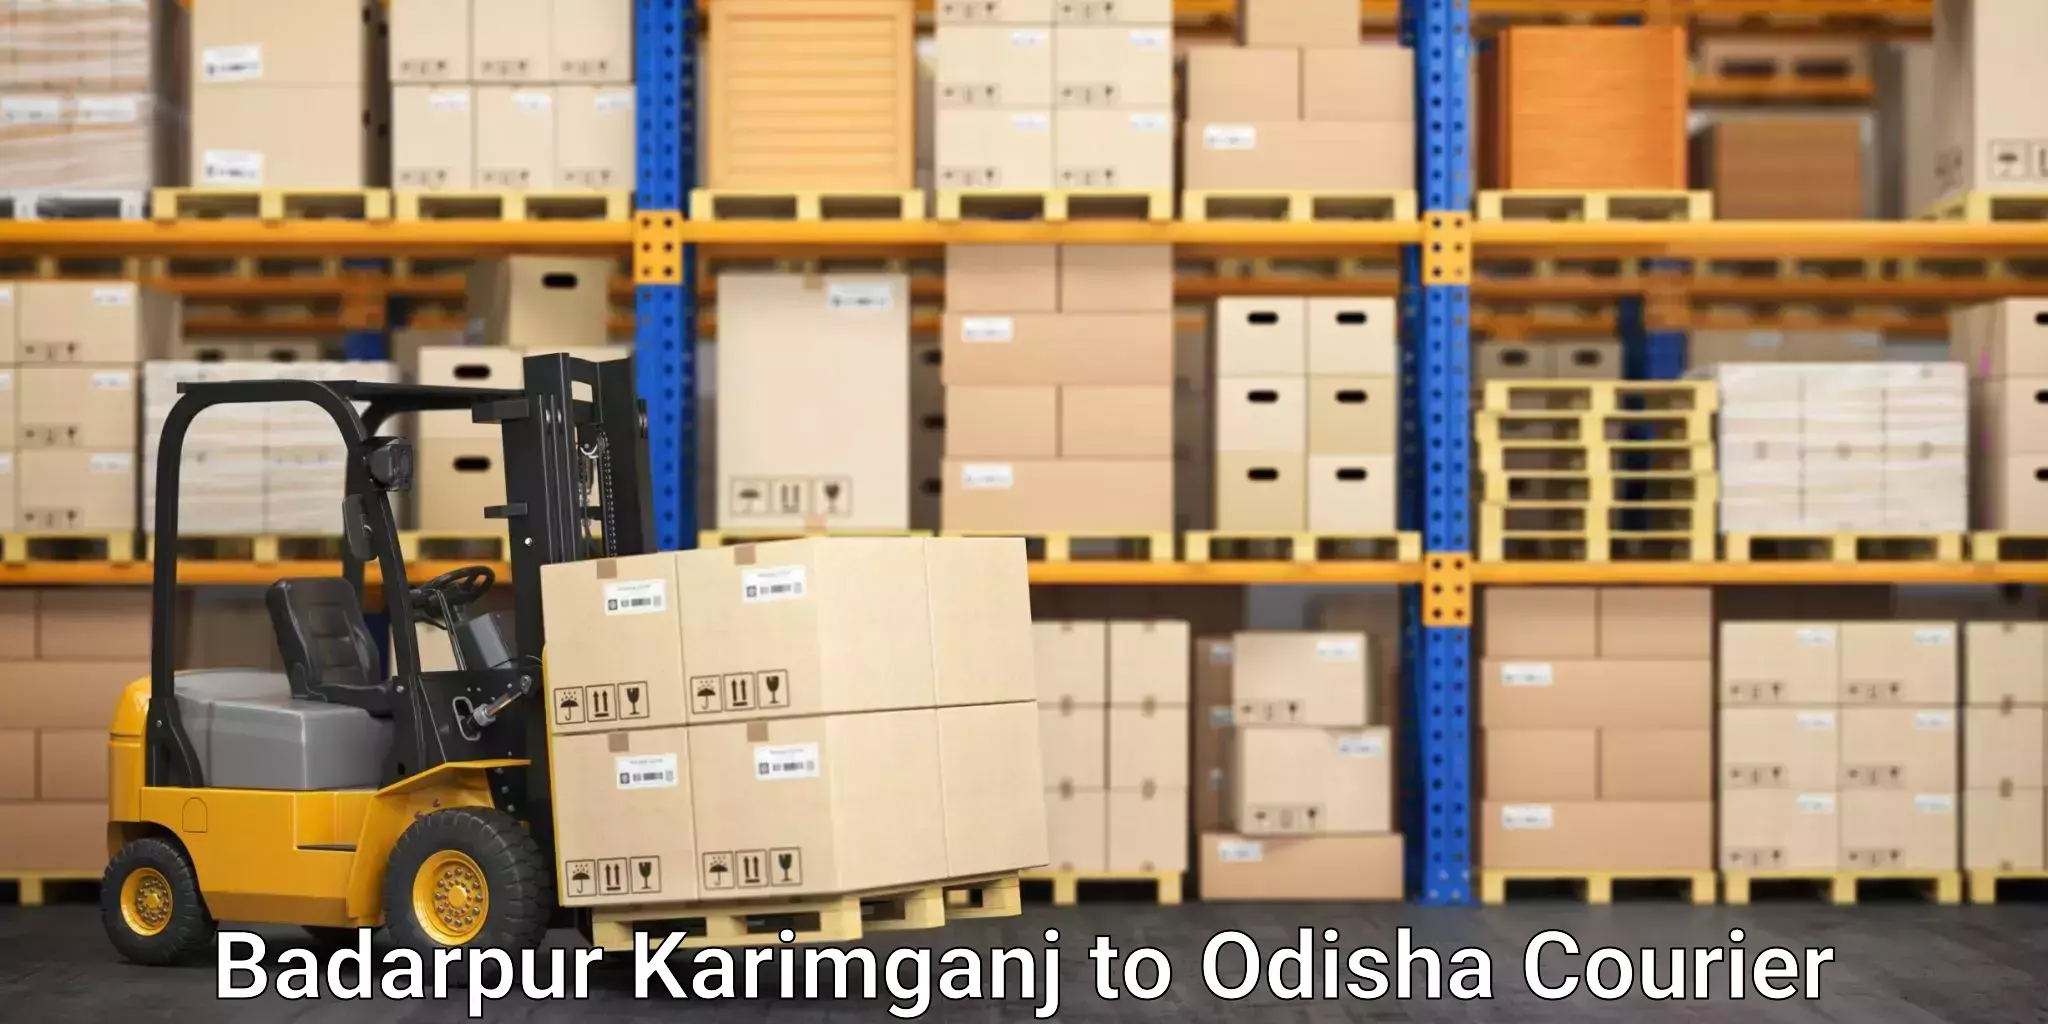 Cost-effective courier solutions Badarpur Karimganj to Odisha